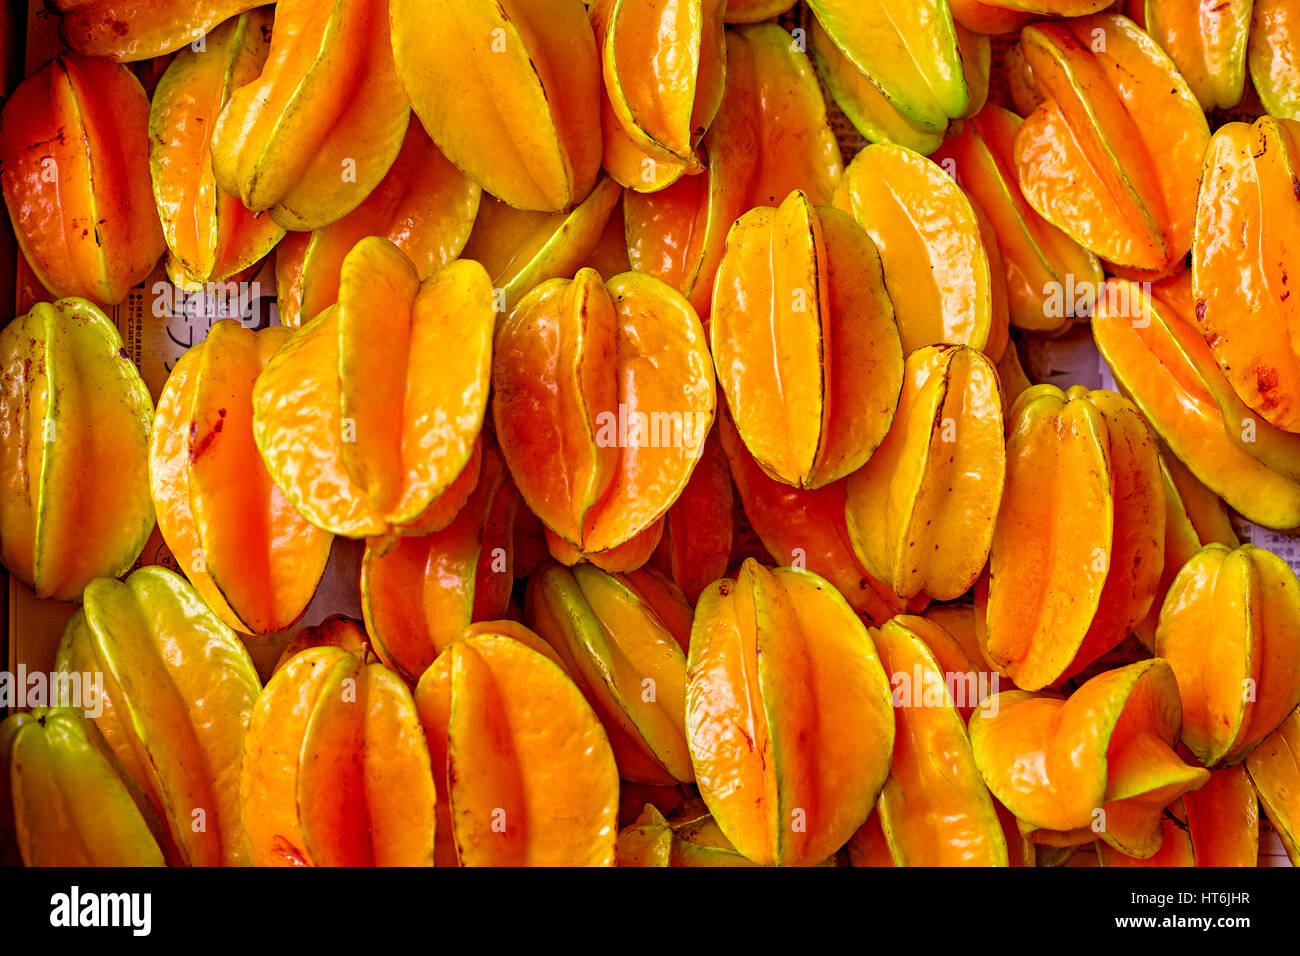 Farmers Market starfruit fruit closeup detail Stock Photo